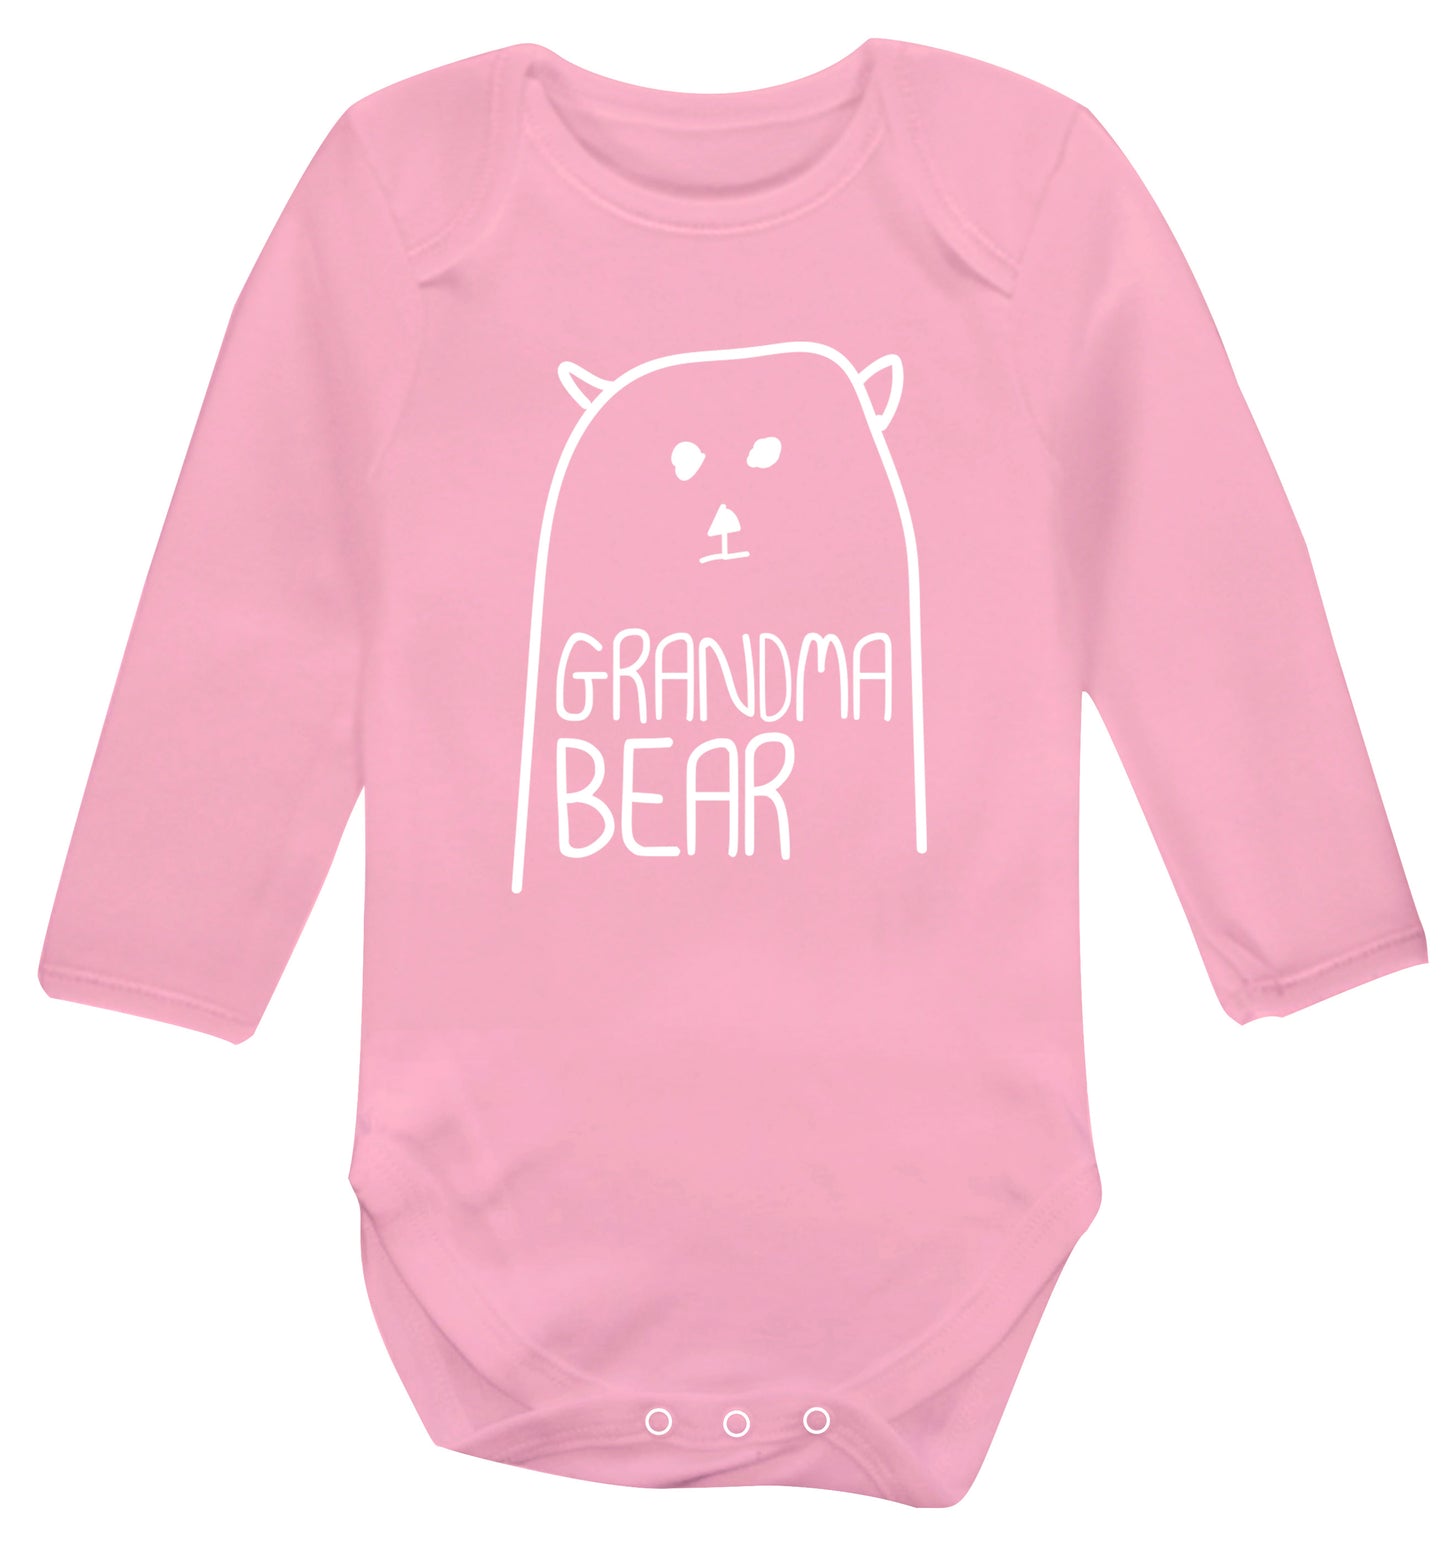 Grandma bear Baby Vest long sleeved pale pink 6-12 months